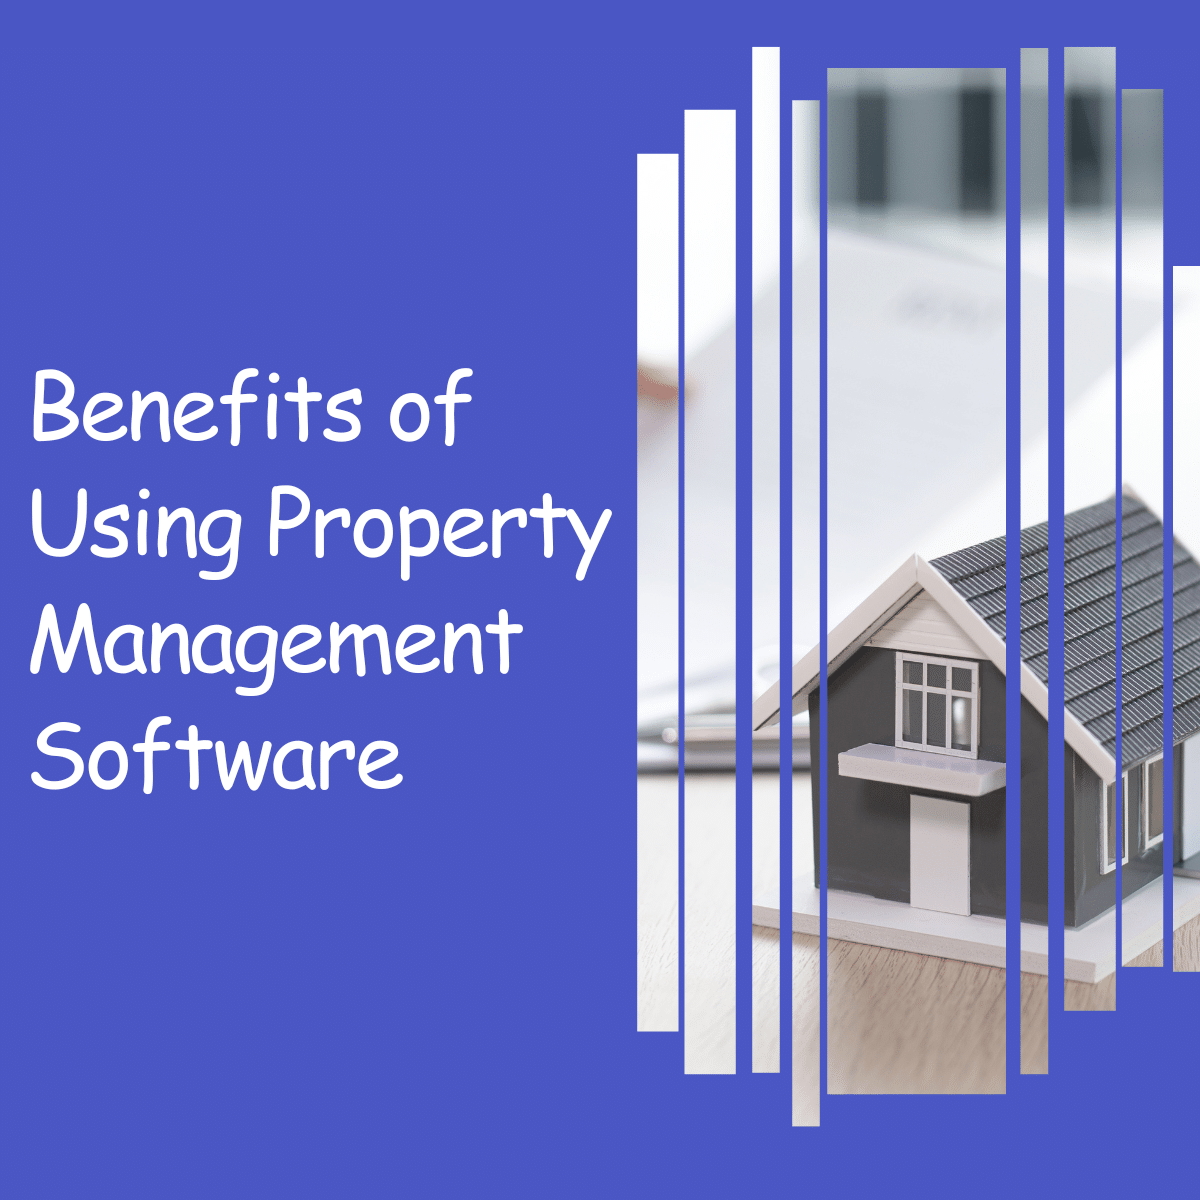 Benefits of Property management software